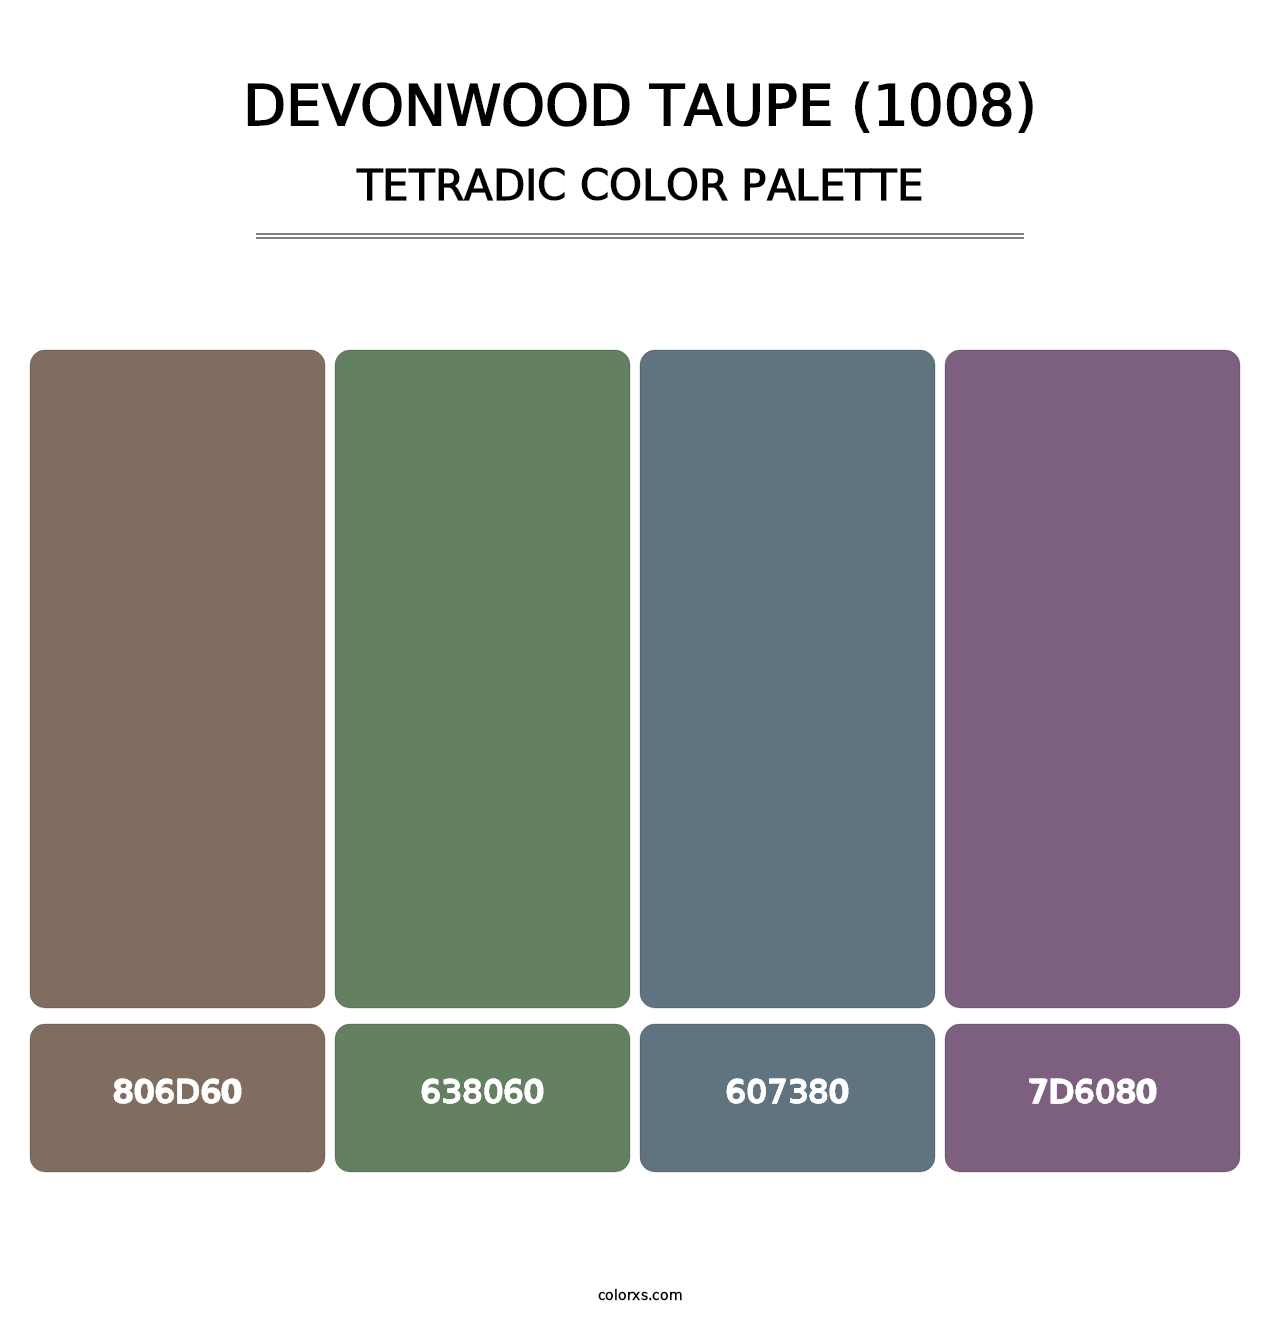 Devonwood Taupe (1008) - Tetradic Color Palette